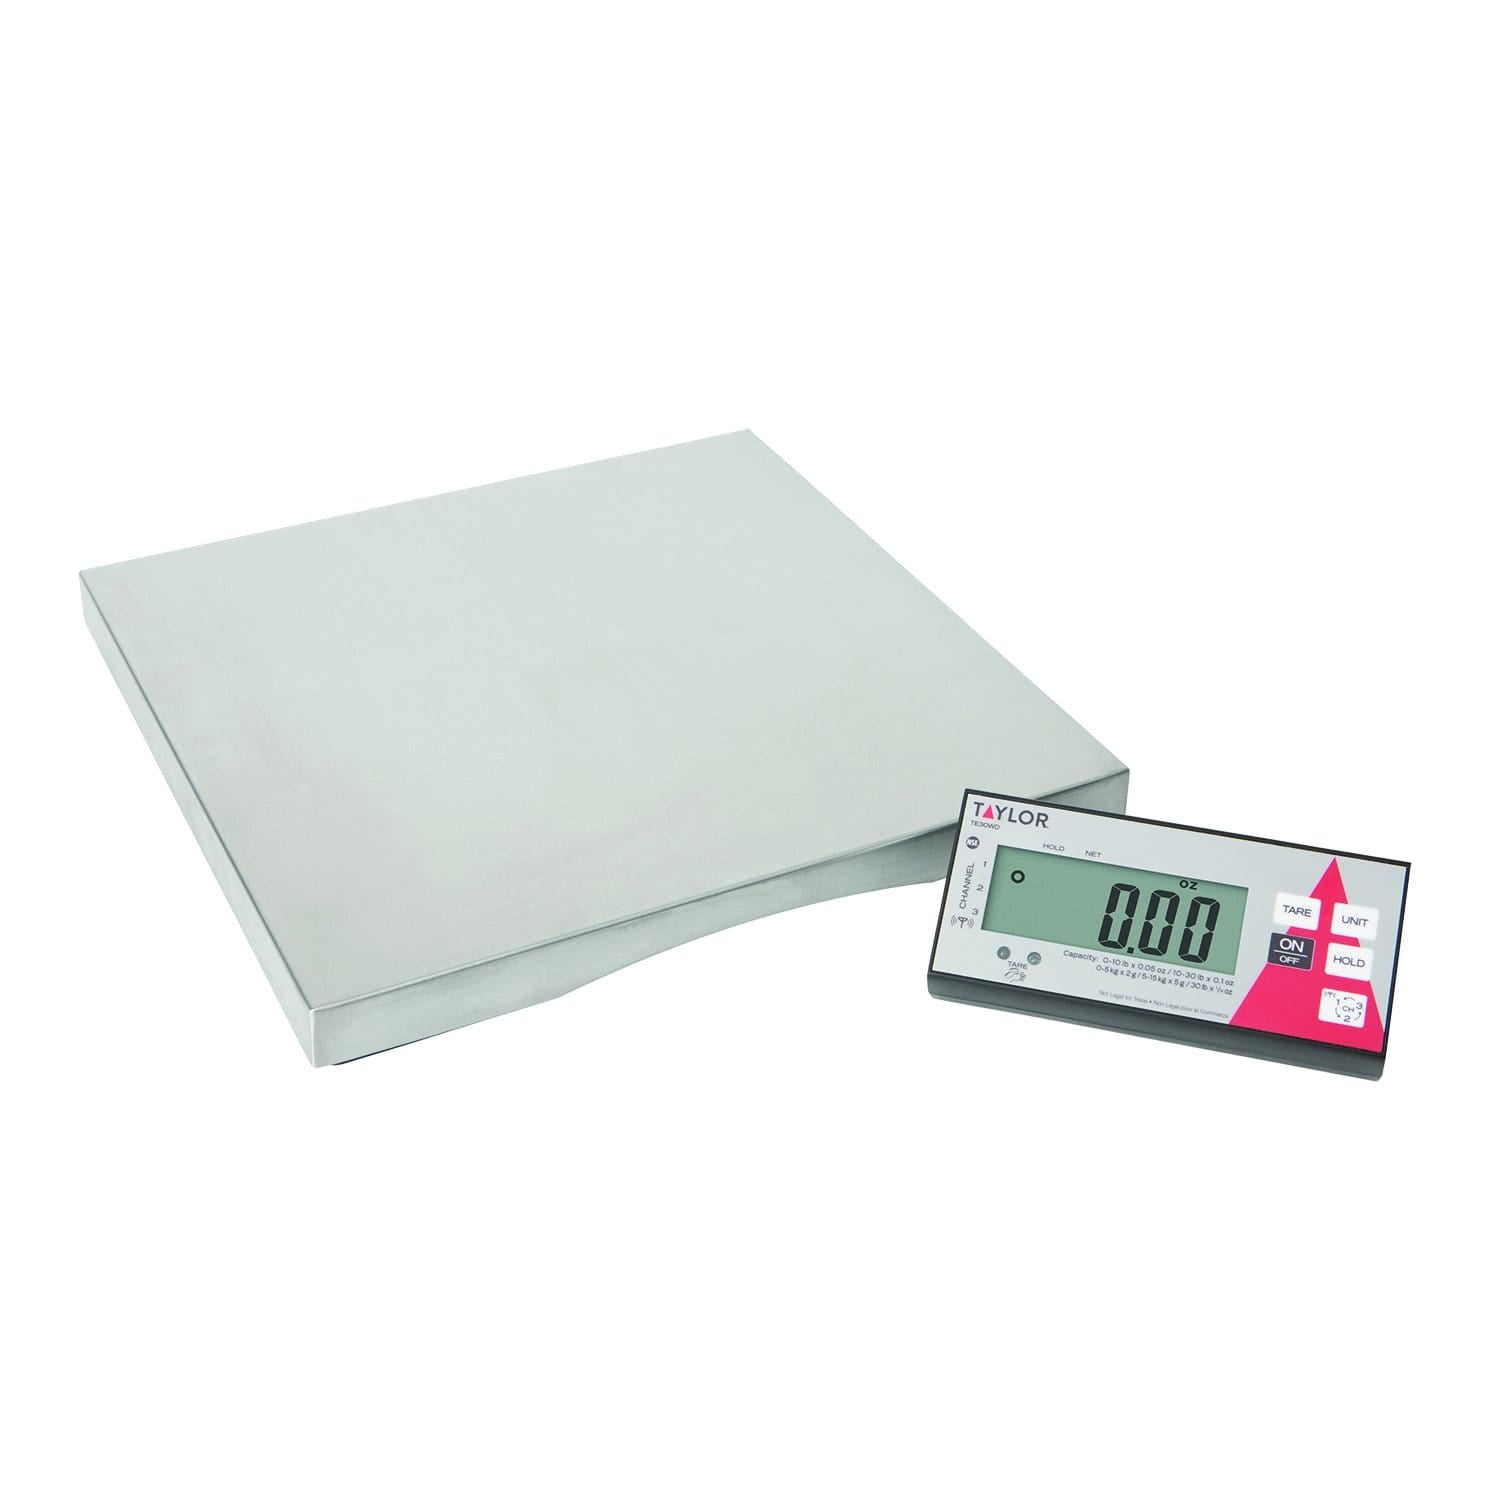 Taylor 20 lb Waterproof Digital Portion Control Scale